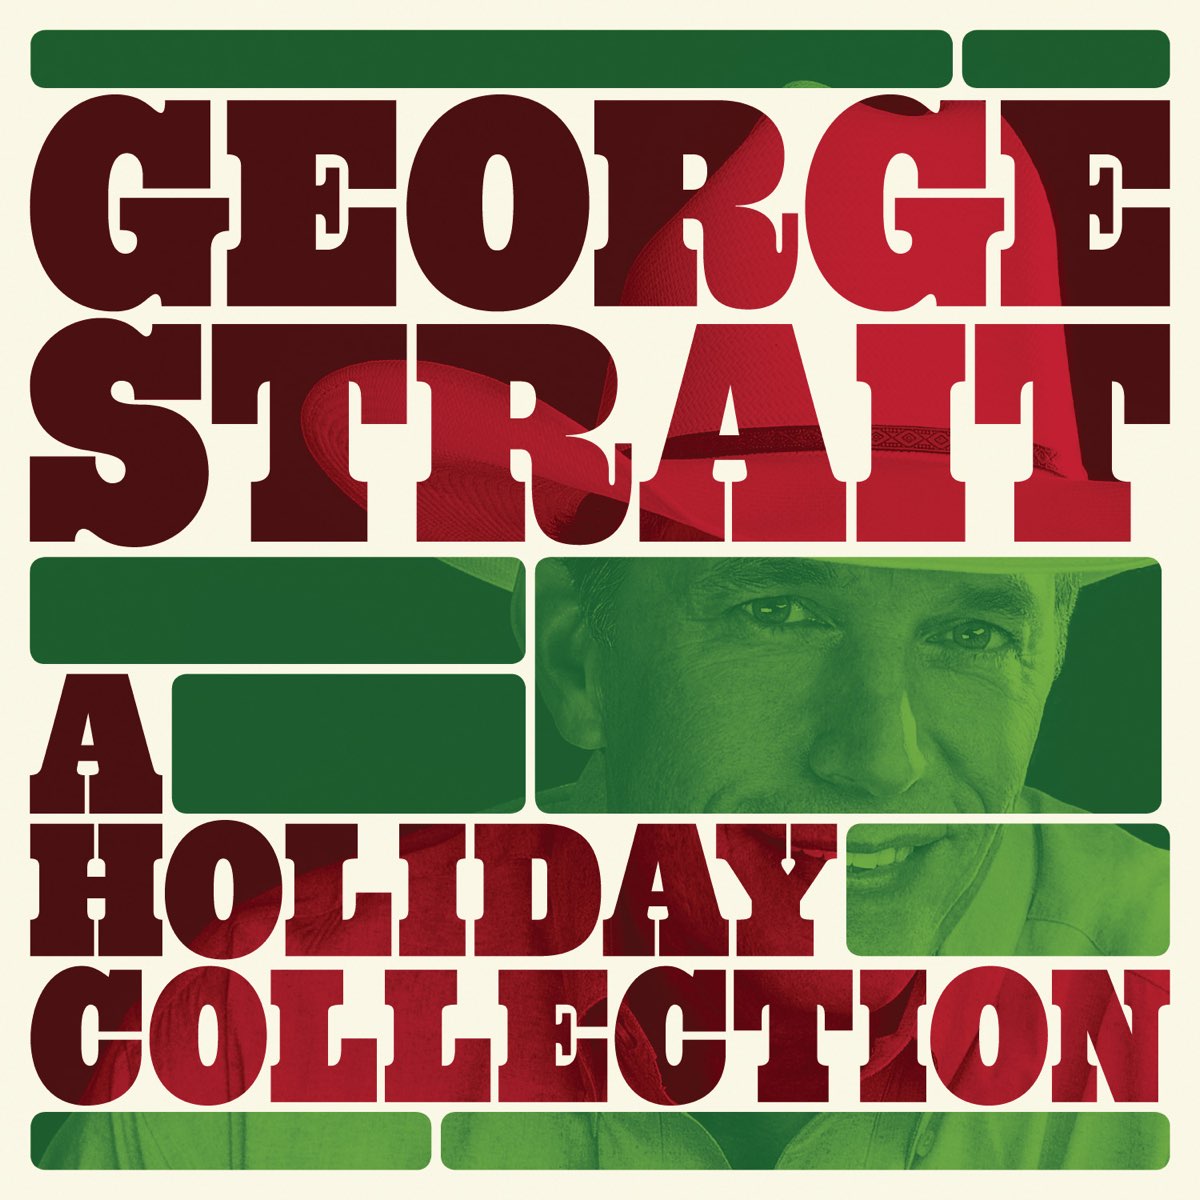 George holiday. George альбом.